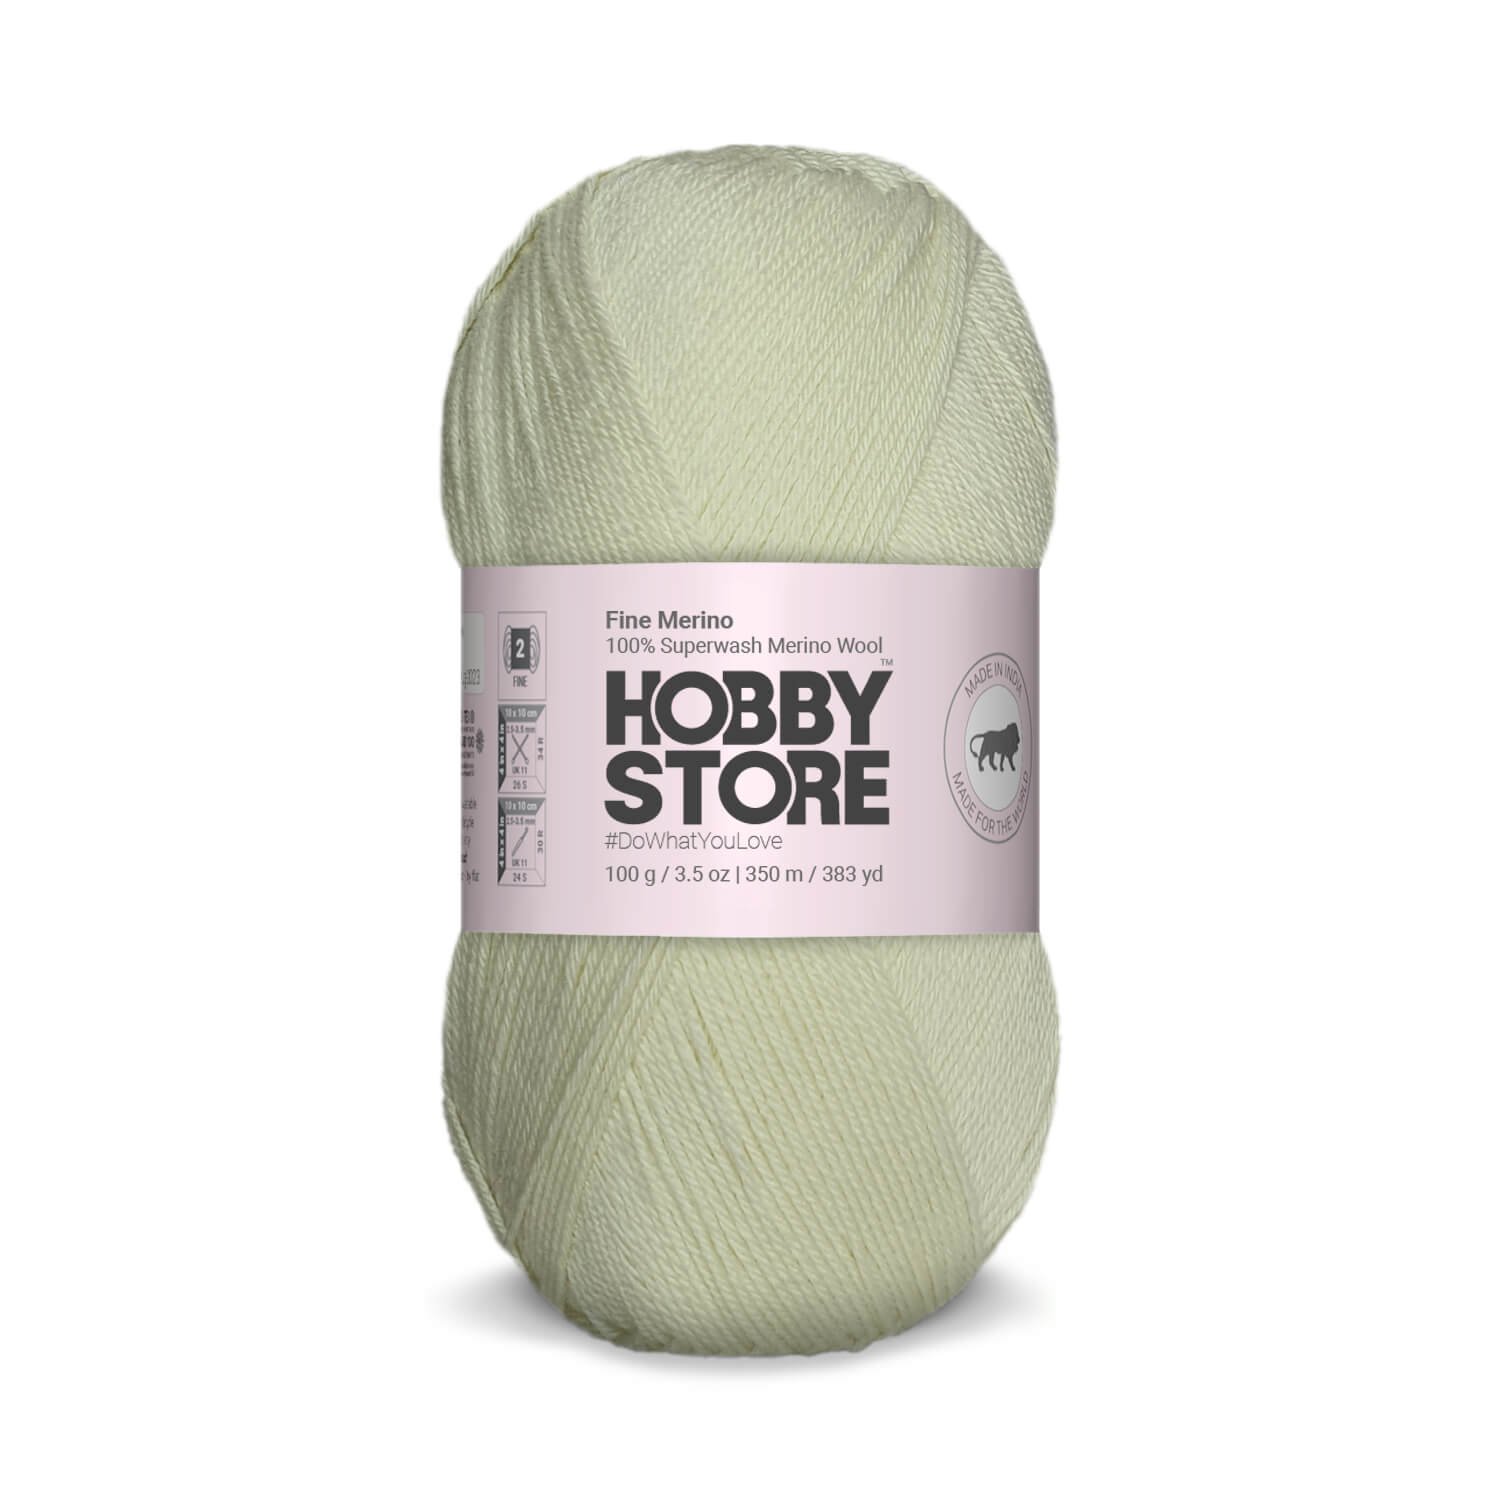 Fine Merino Wool by Hobby Store - Off White FM010